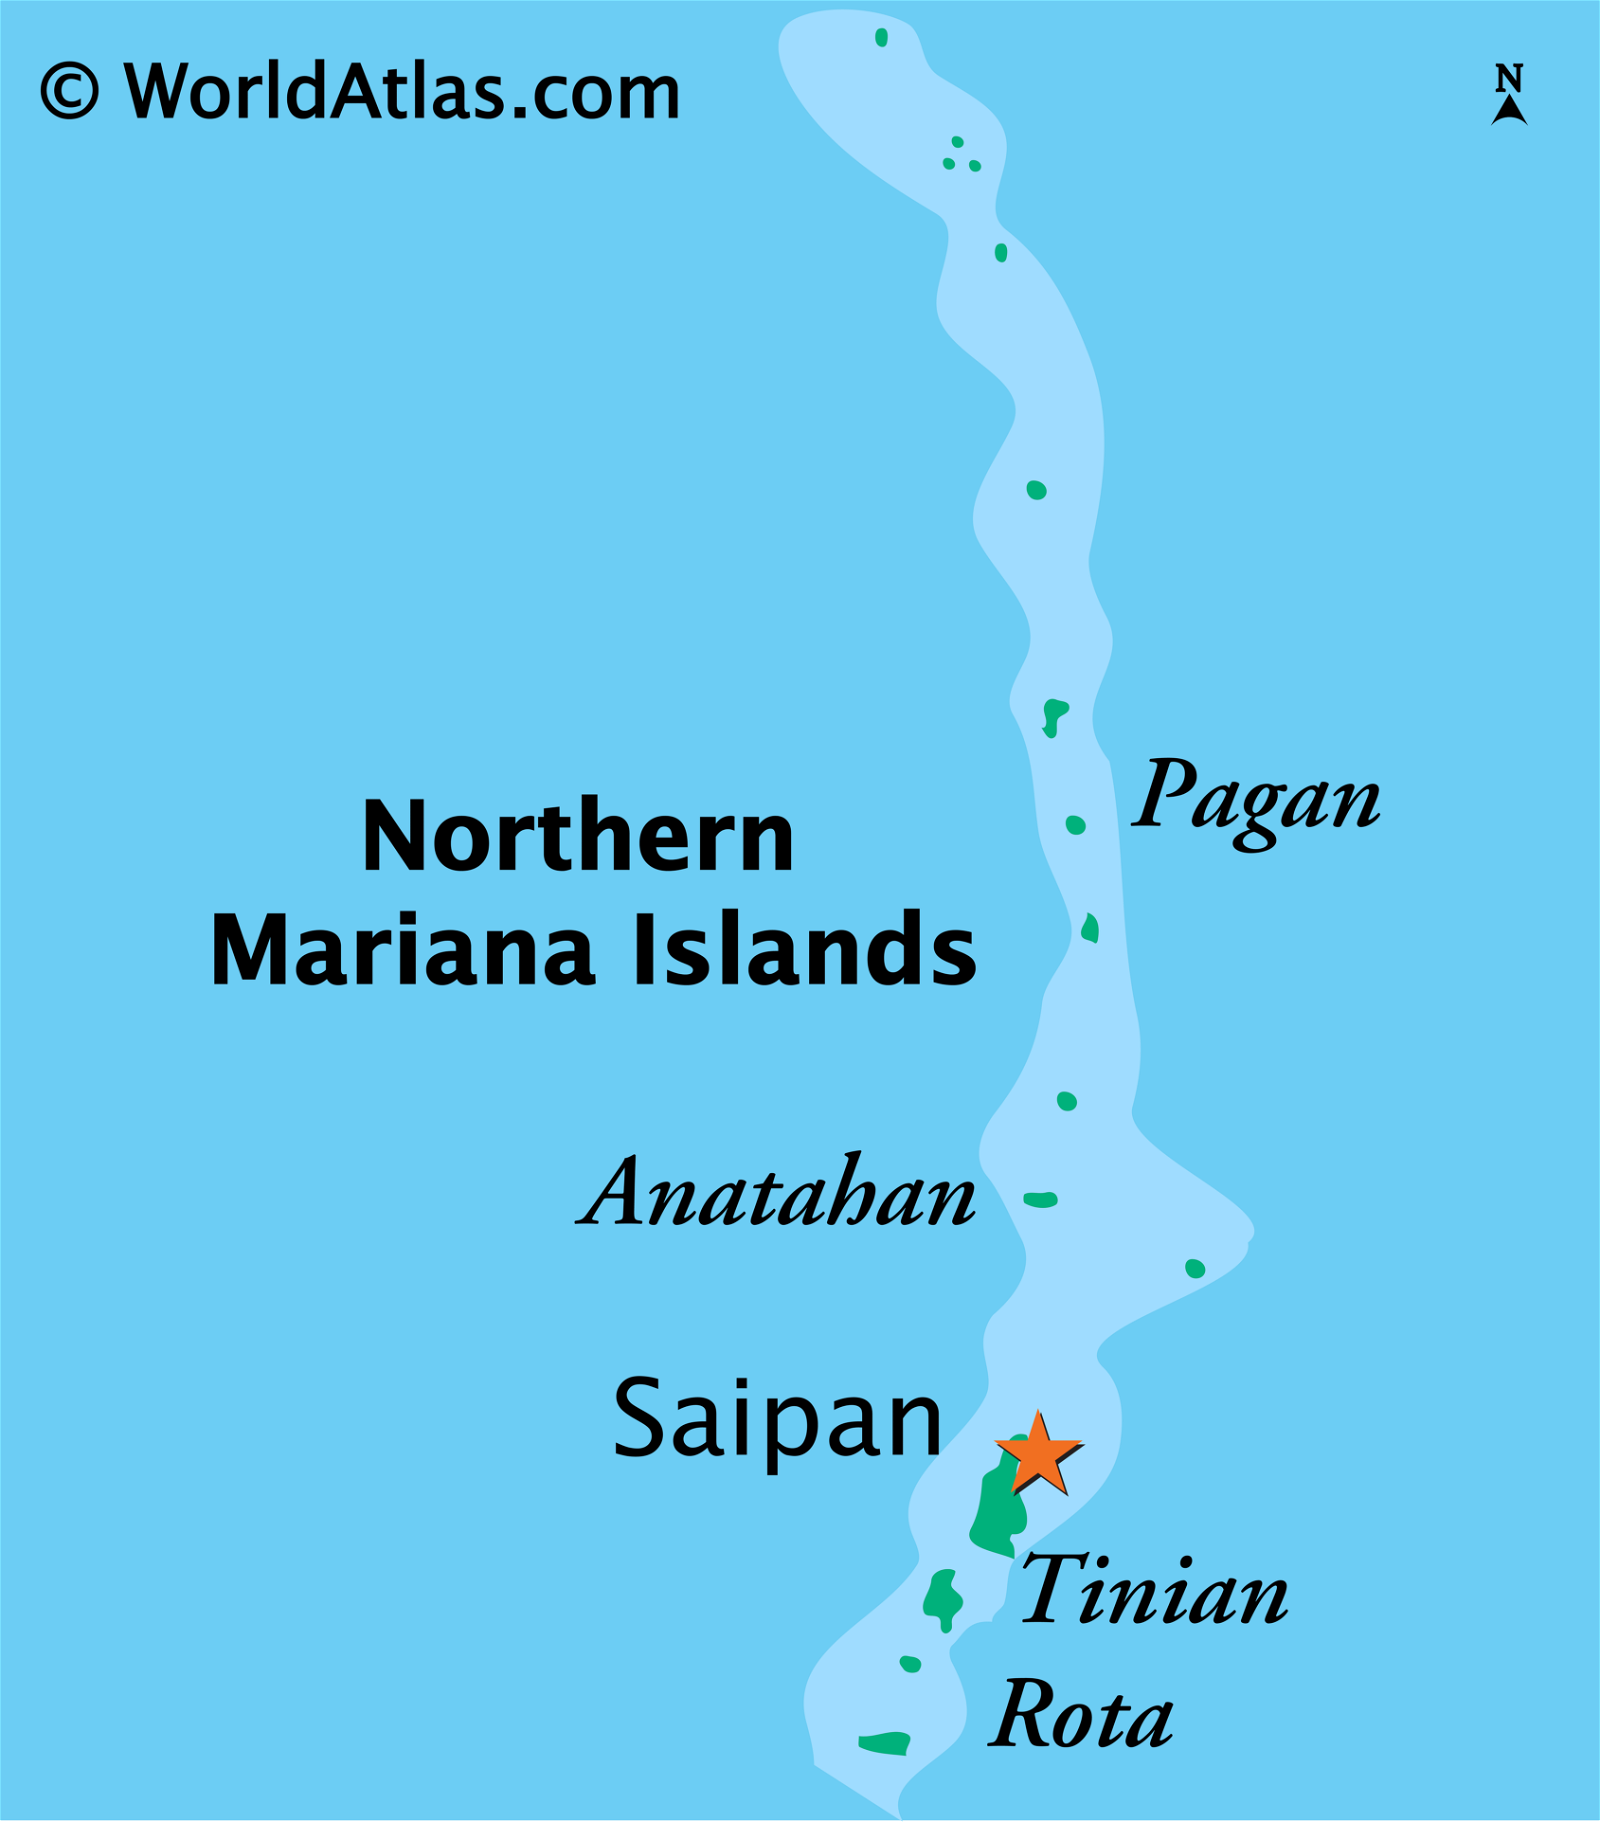 Northern Mariana Islands Maps & Facts - World Atlas